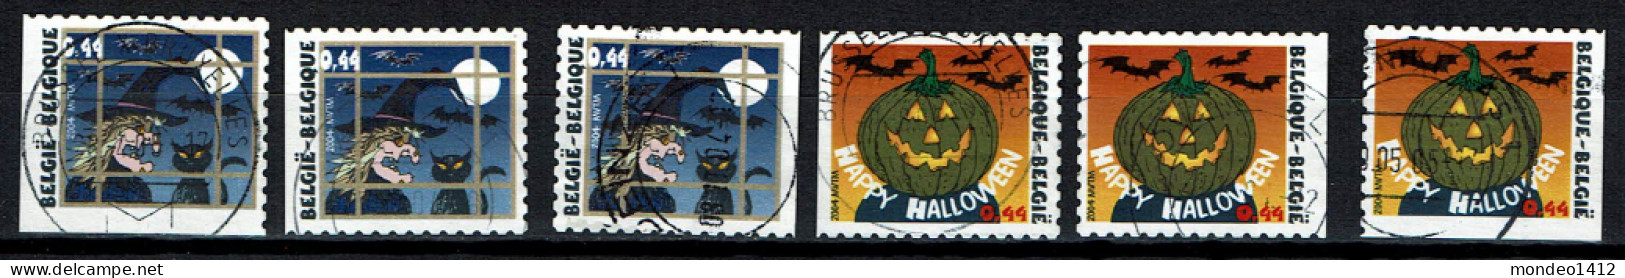 België OBP 3324/3325 - Halloween Pumpkin - Witch - Usados